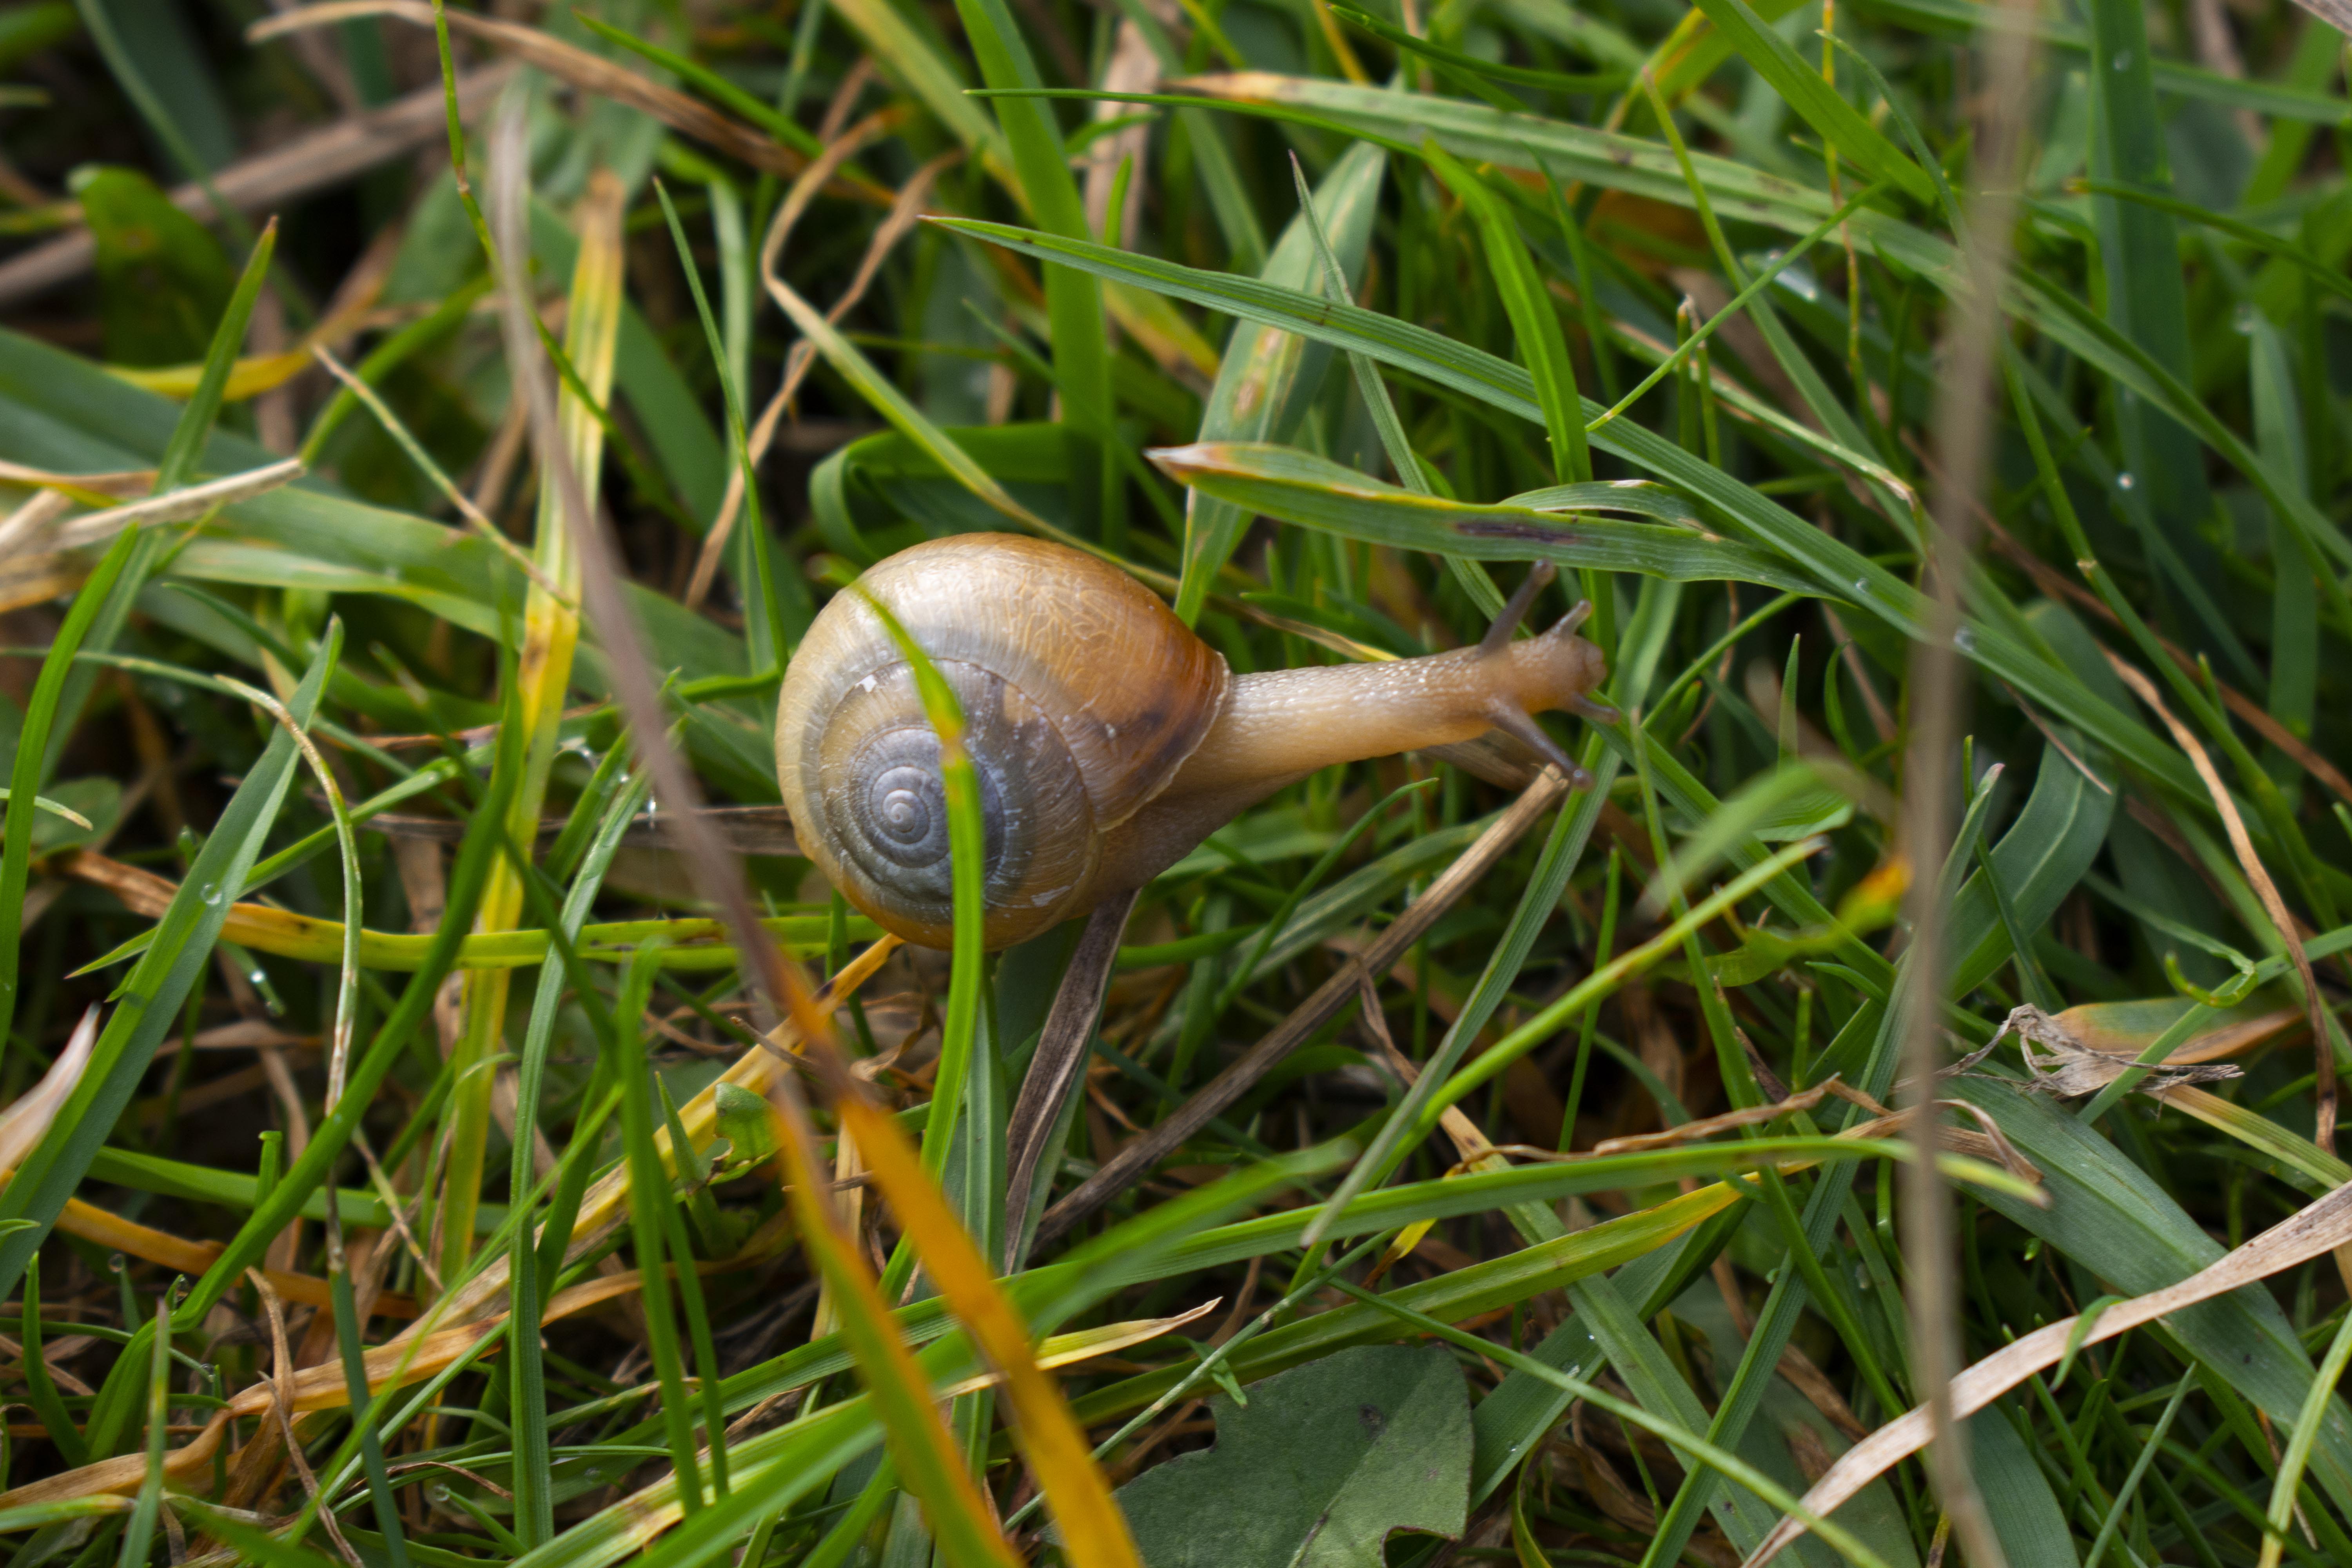 A Snail on the grass.